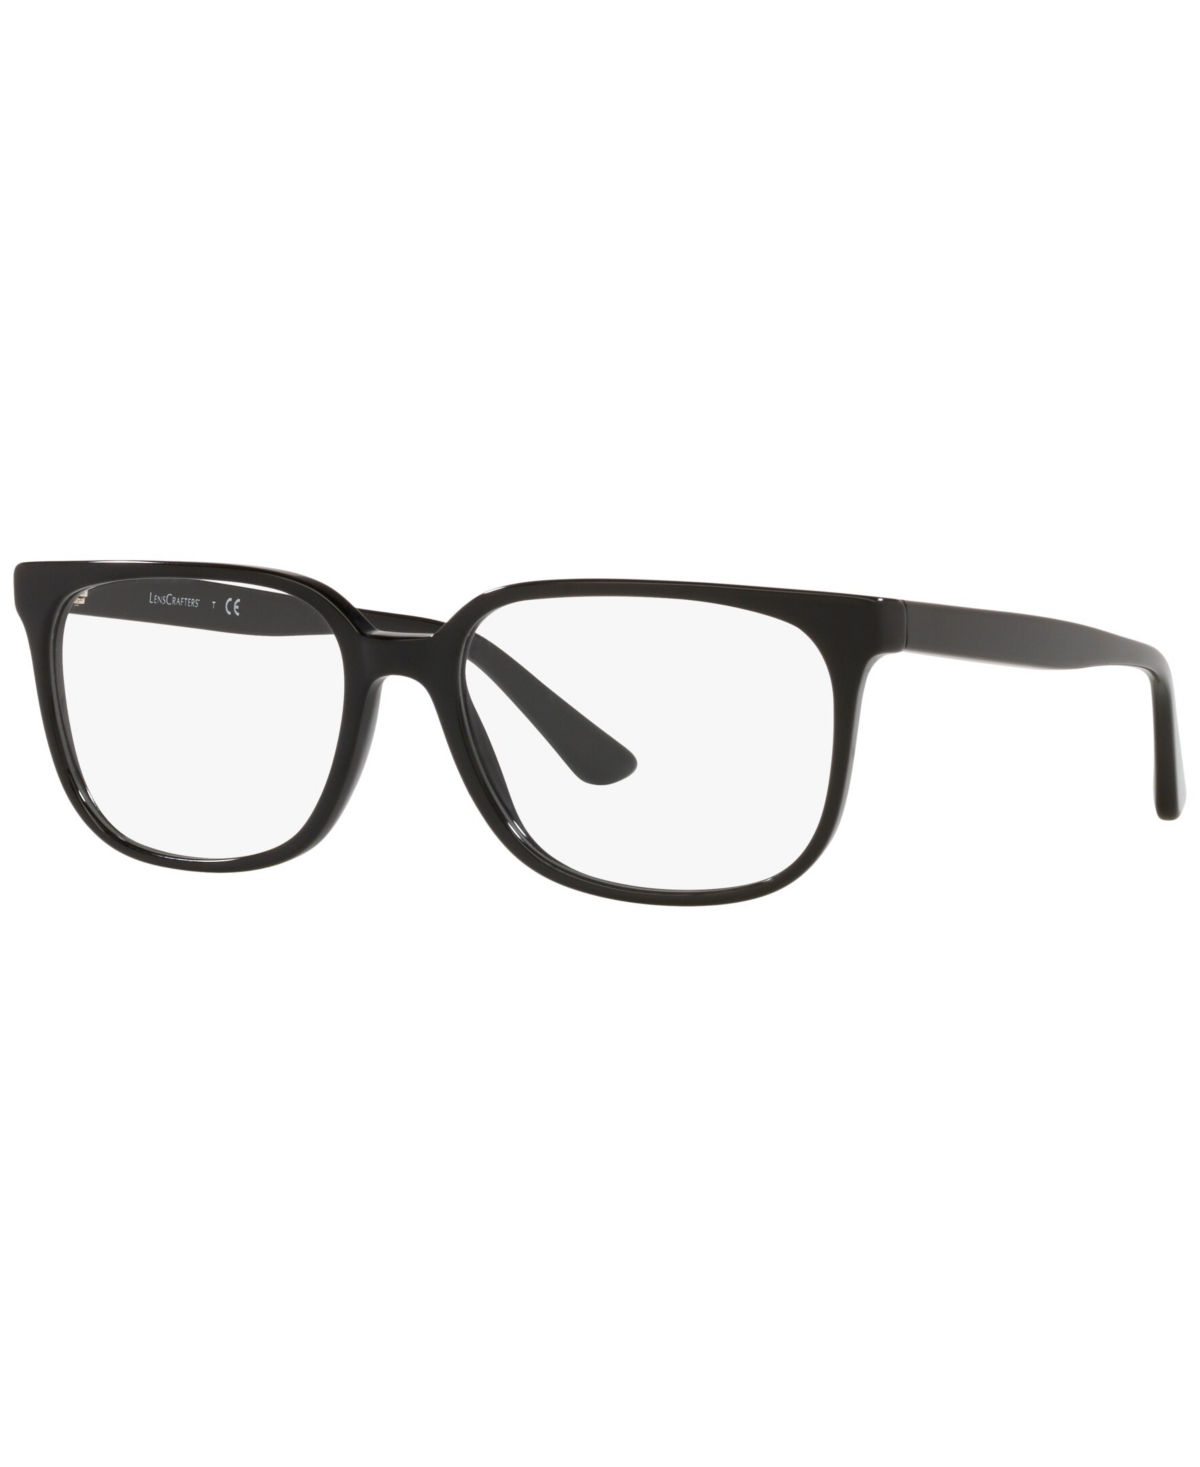 EC2009 Men's Rectangle Eyeglasses - Shiny Black